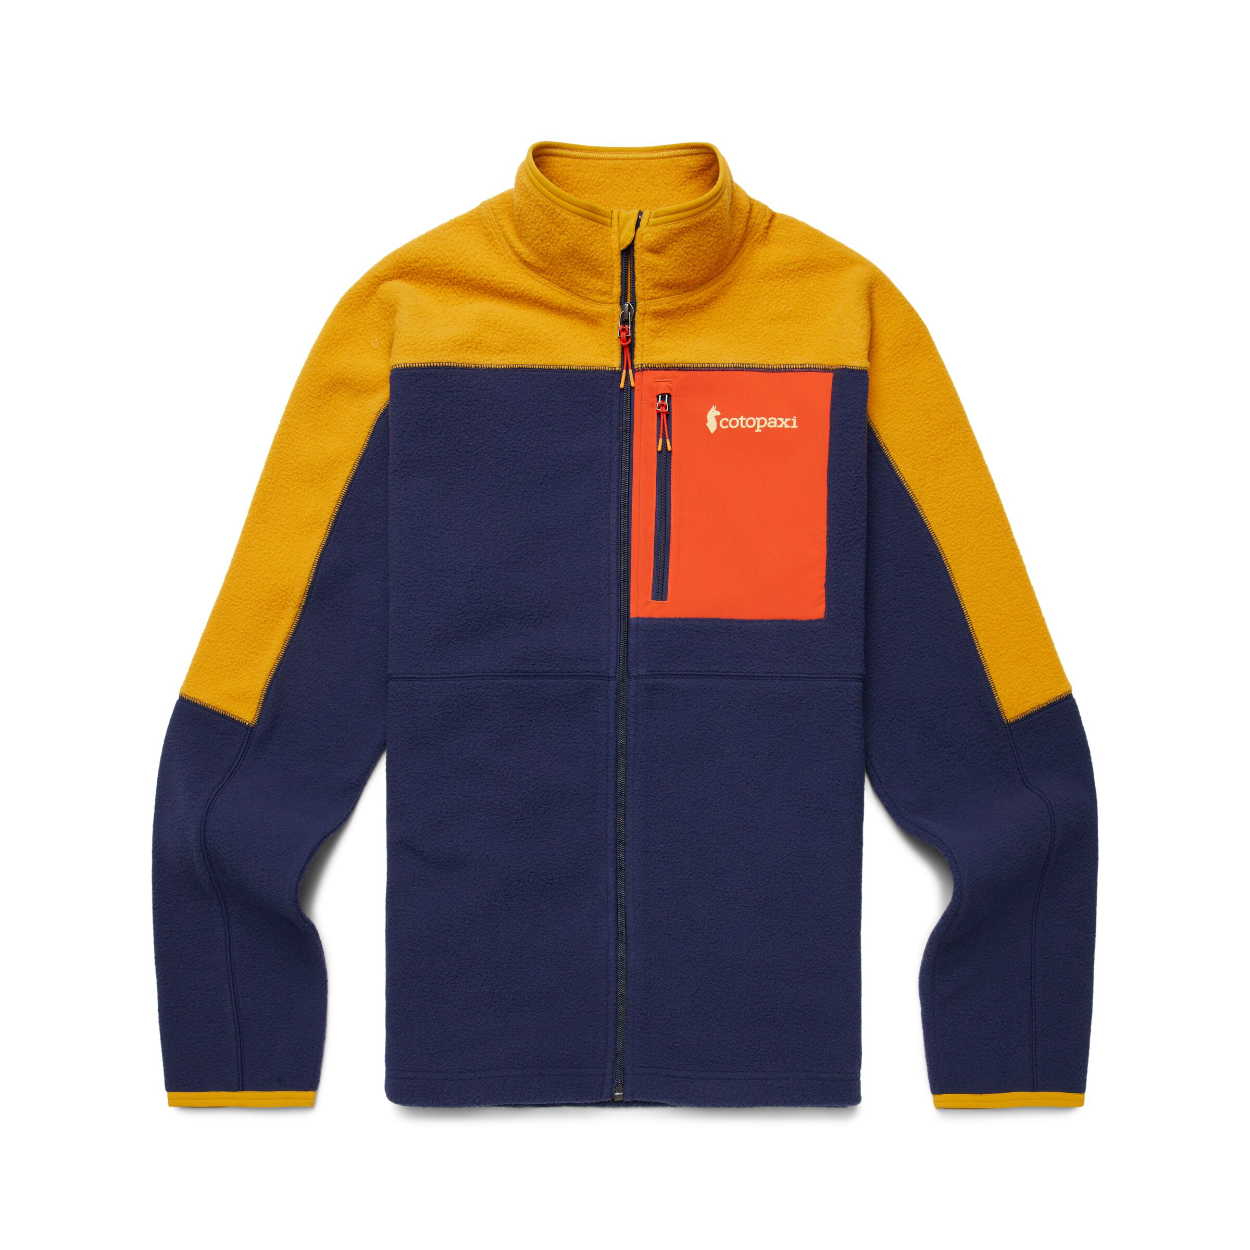 Abrazo Fleece Full-Zip Jacket men, amber/maritime